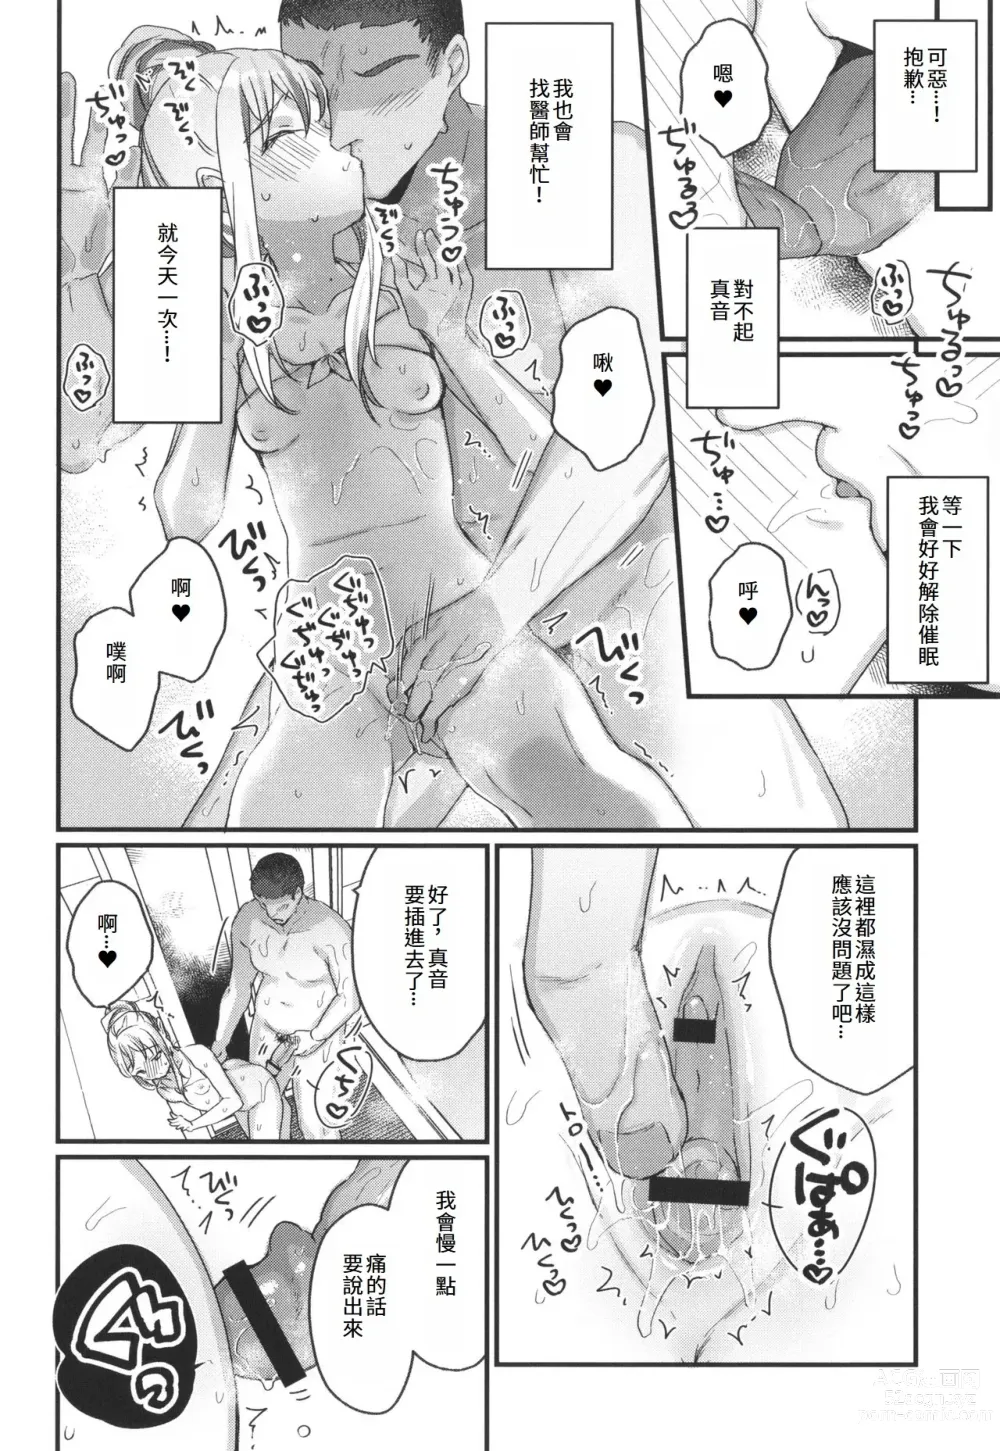 Page 10 of manga 催眠治療太有效了